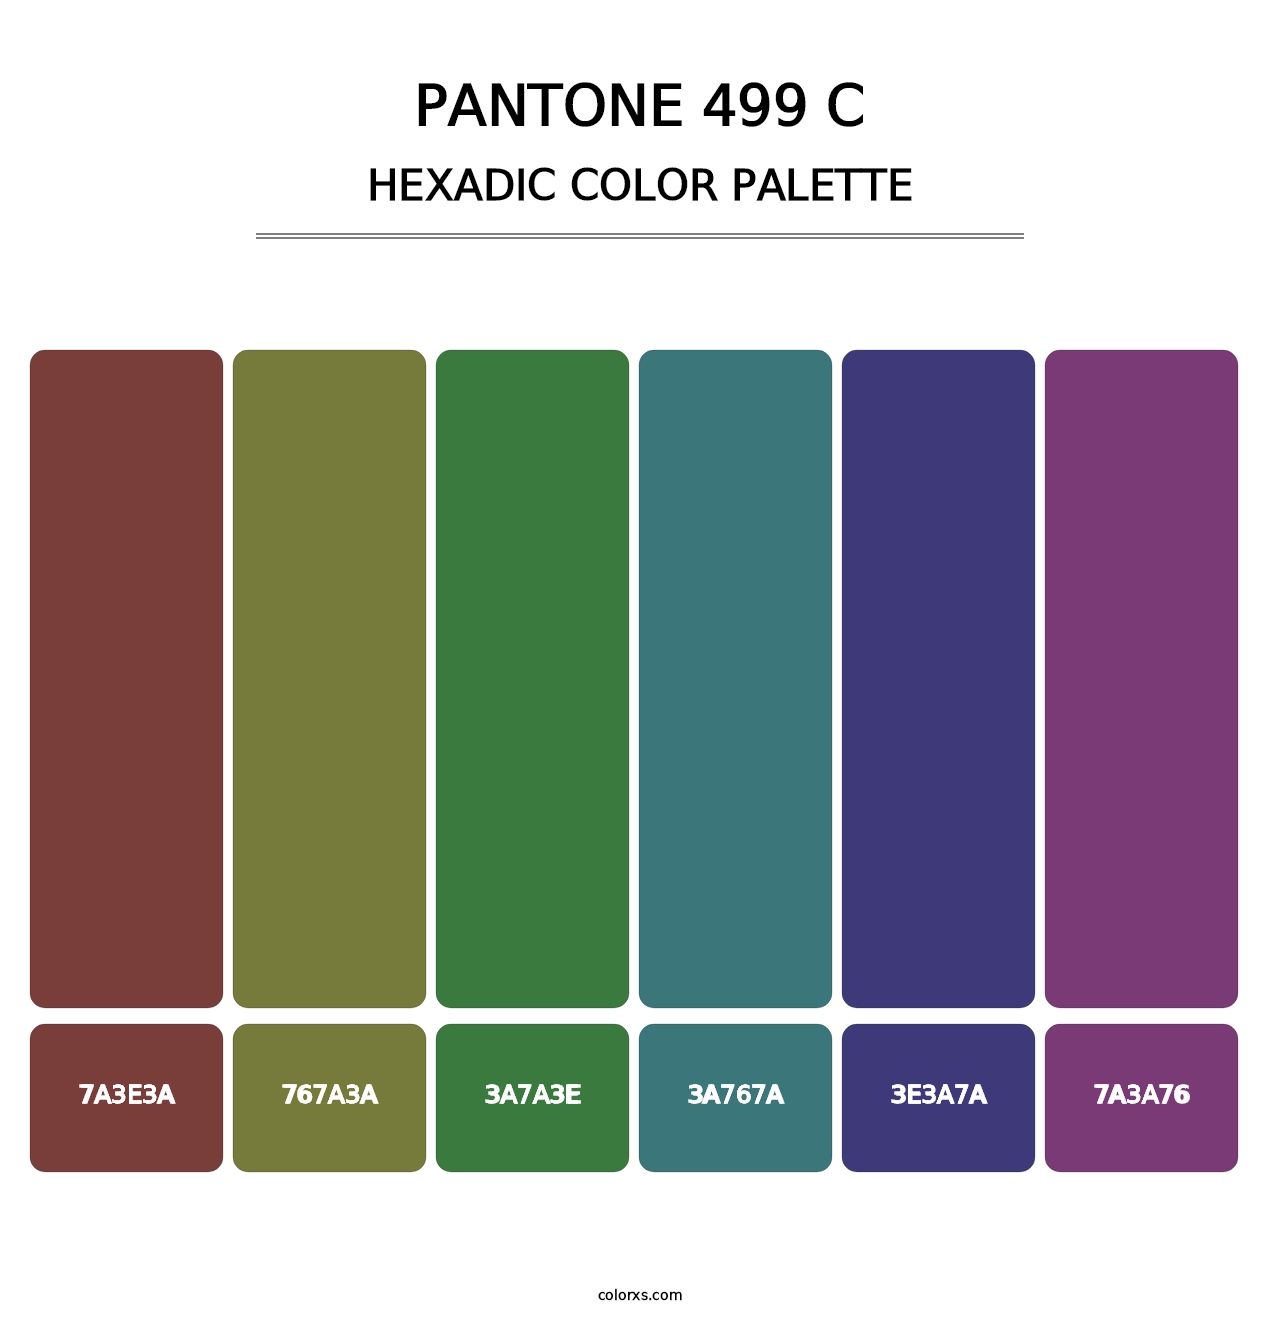 PANTONE 499 C - Hexadic Color Palette